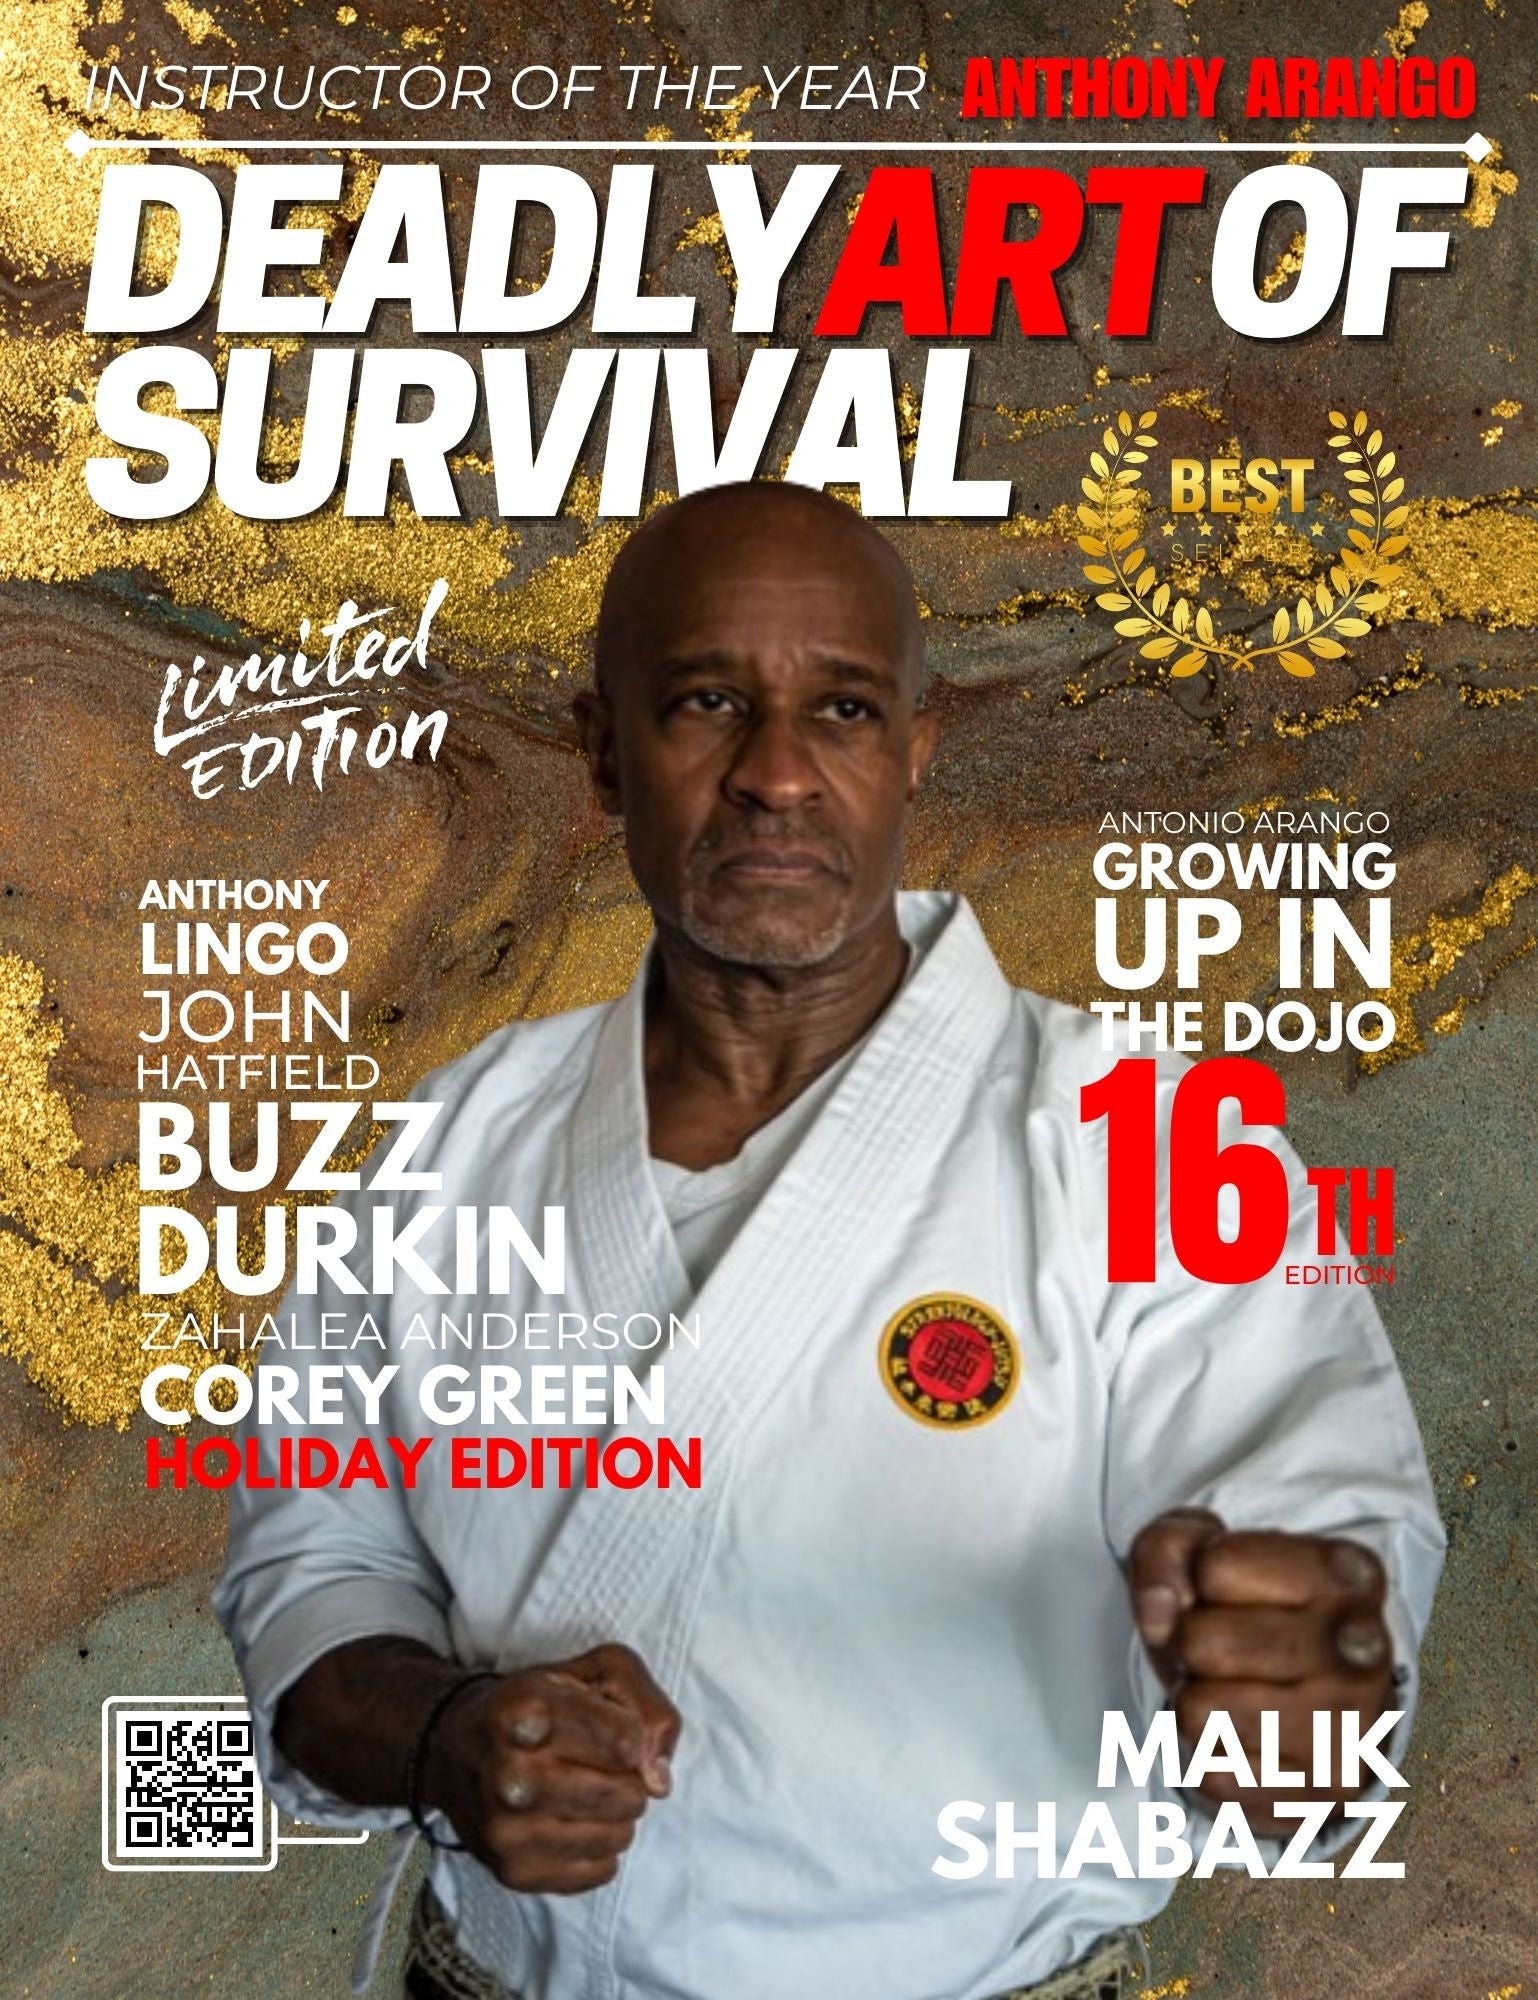 Deadly Art of Survival Magazine 16th Edition: Featuring Anthony Arango - Buzz Durkin - Abdul Shabazz The #1 Martial Arts Magazine Worldwide deadlyartofsurvival.com